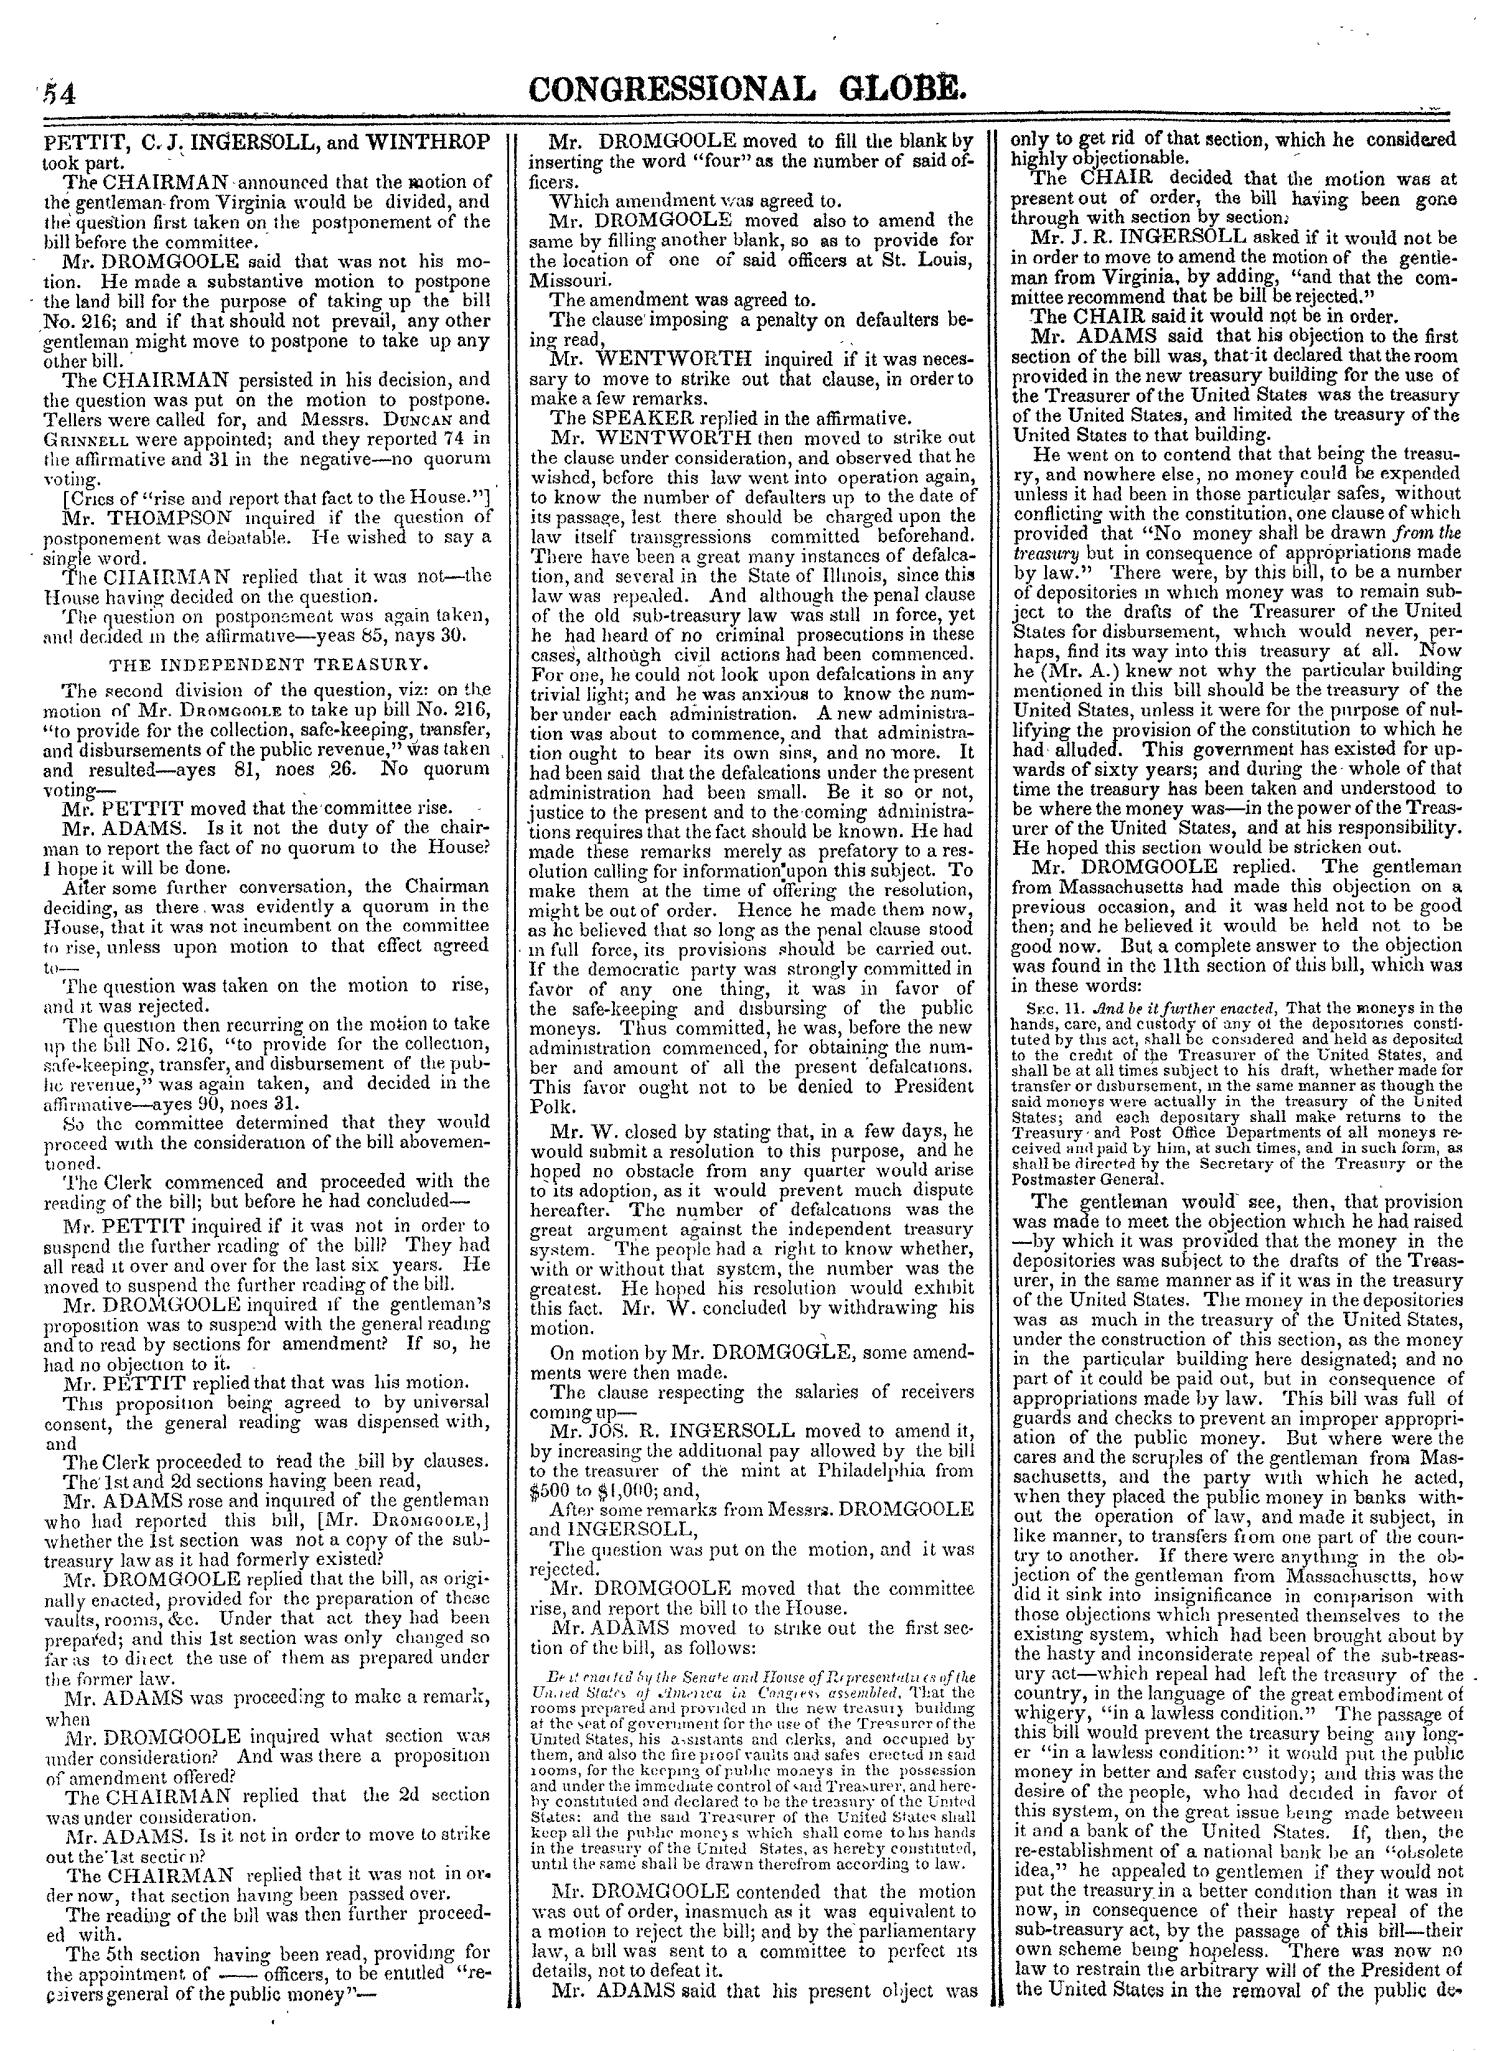 The Congressional Globe, Volume 14: Twenty-Eighth Congress, Second Session
                                                
                                                    54
                                                